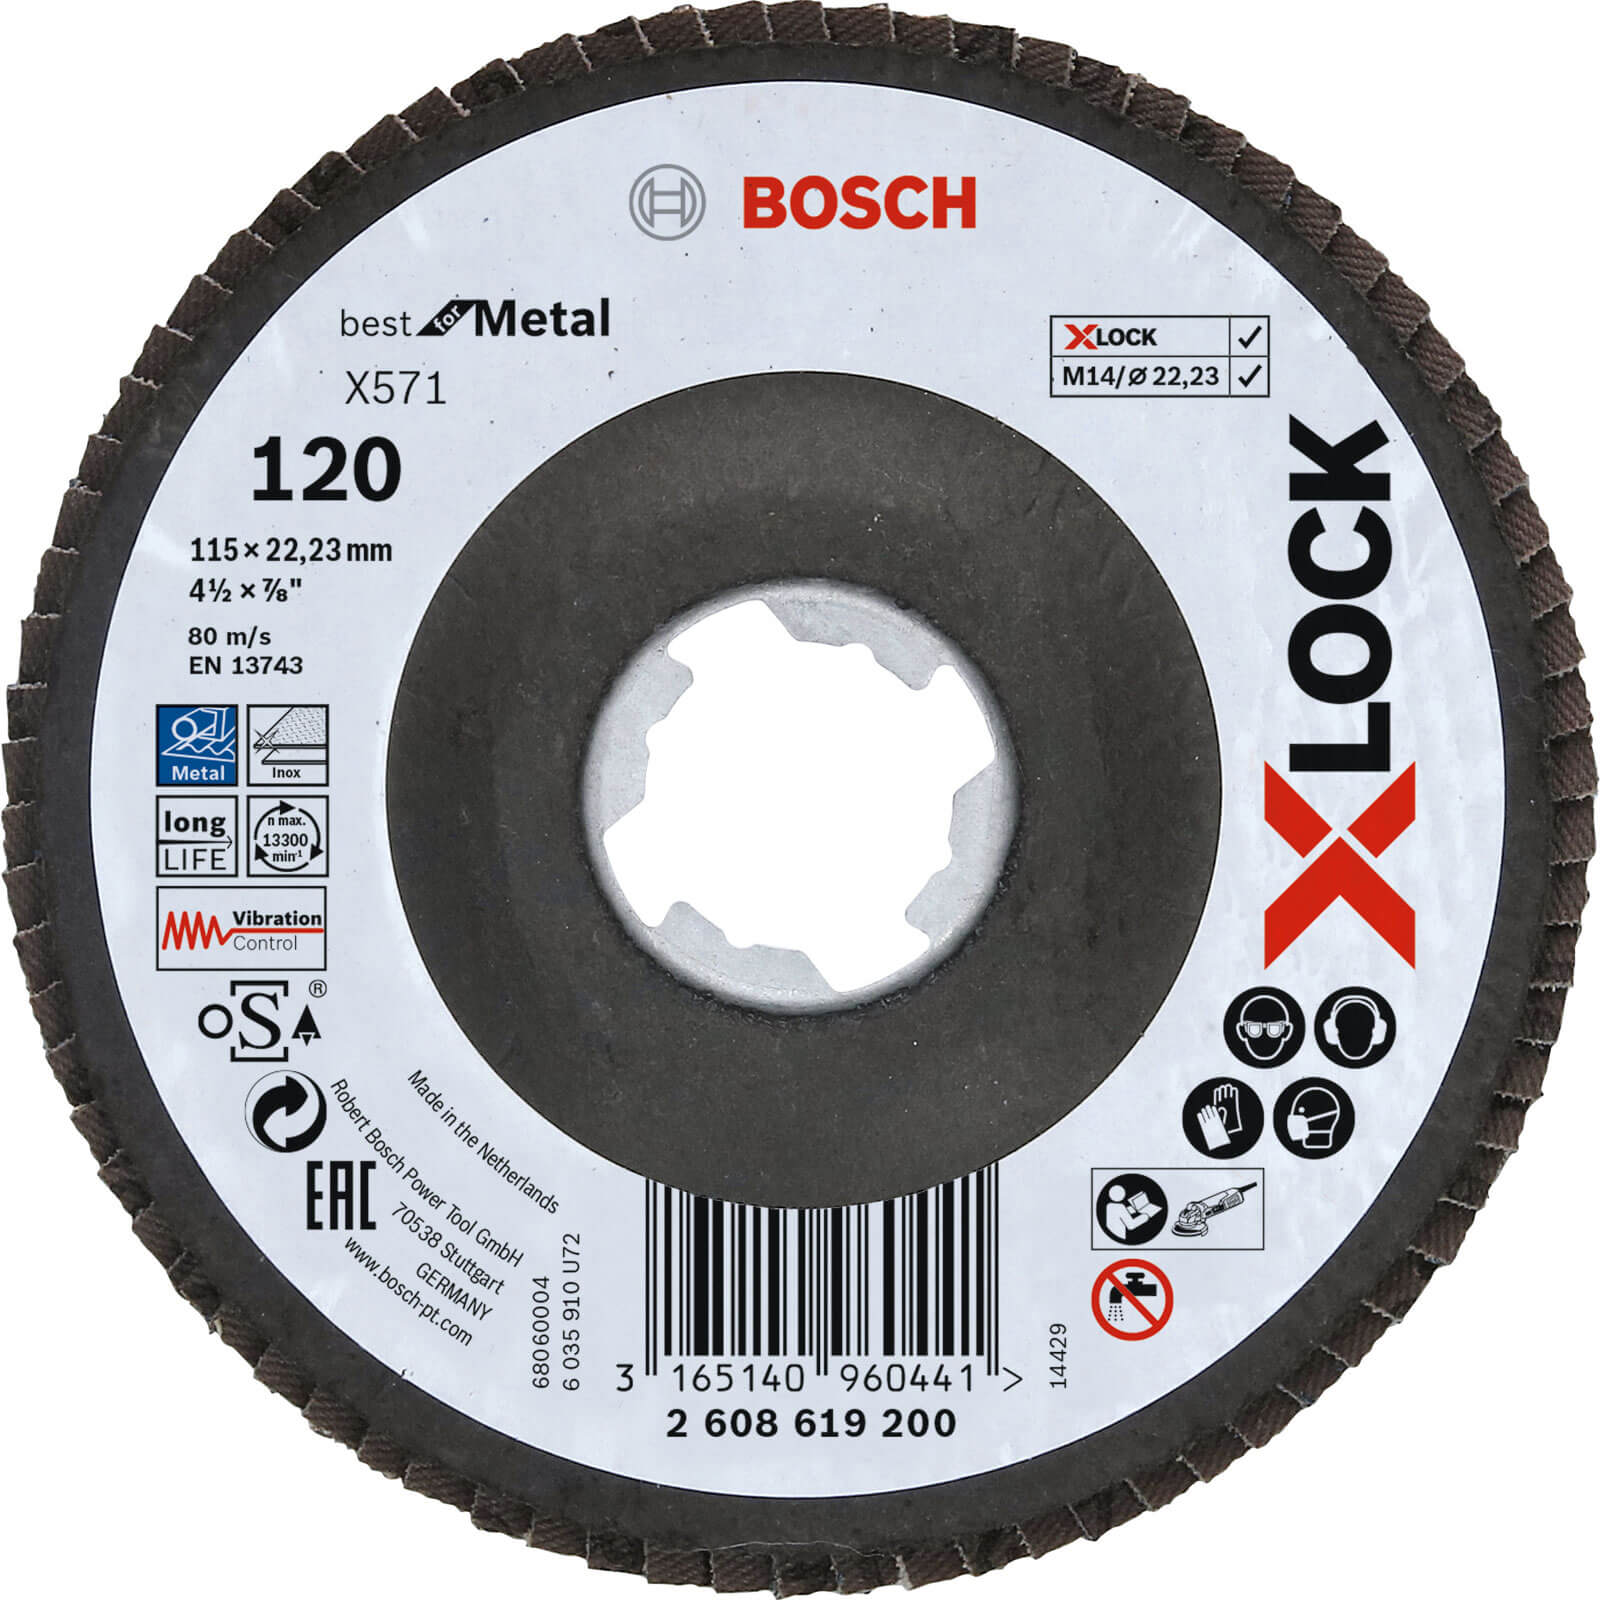 Photos - Cutting Disc Bosch X Lock Zirconium Abrasive Flap Disc 115mm 120g Pack of 1 2608619200 